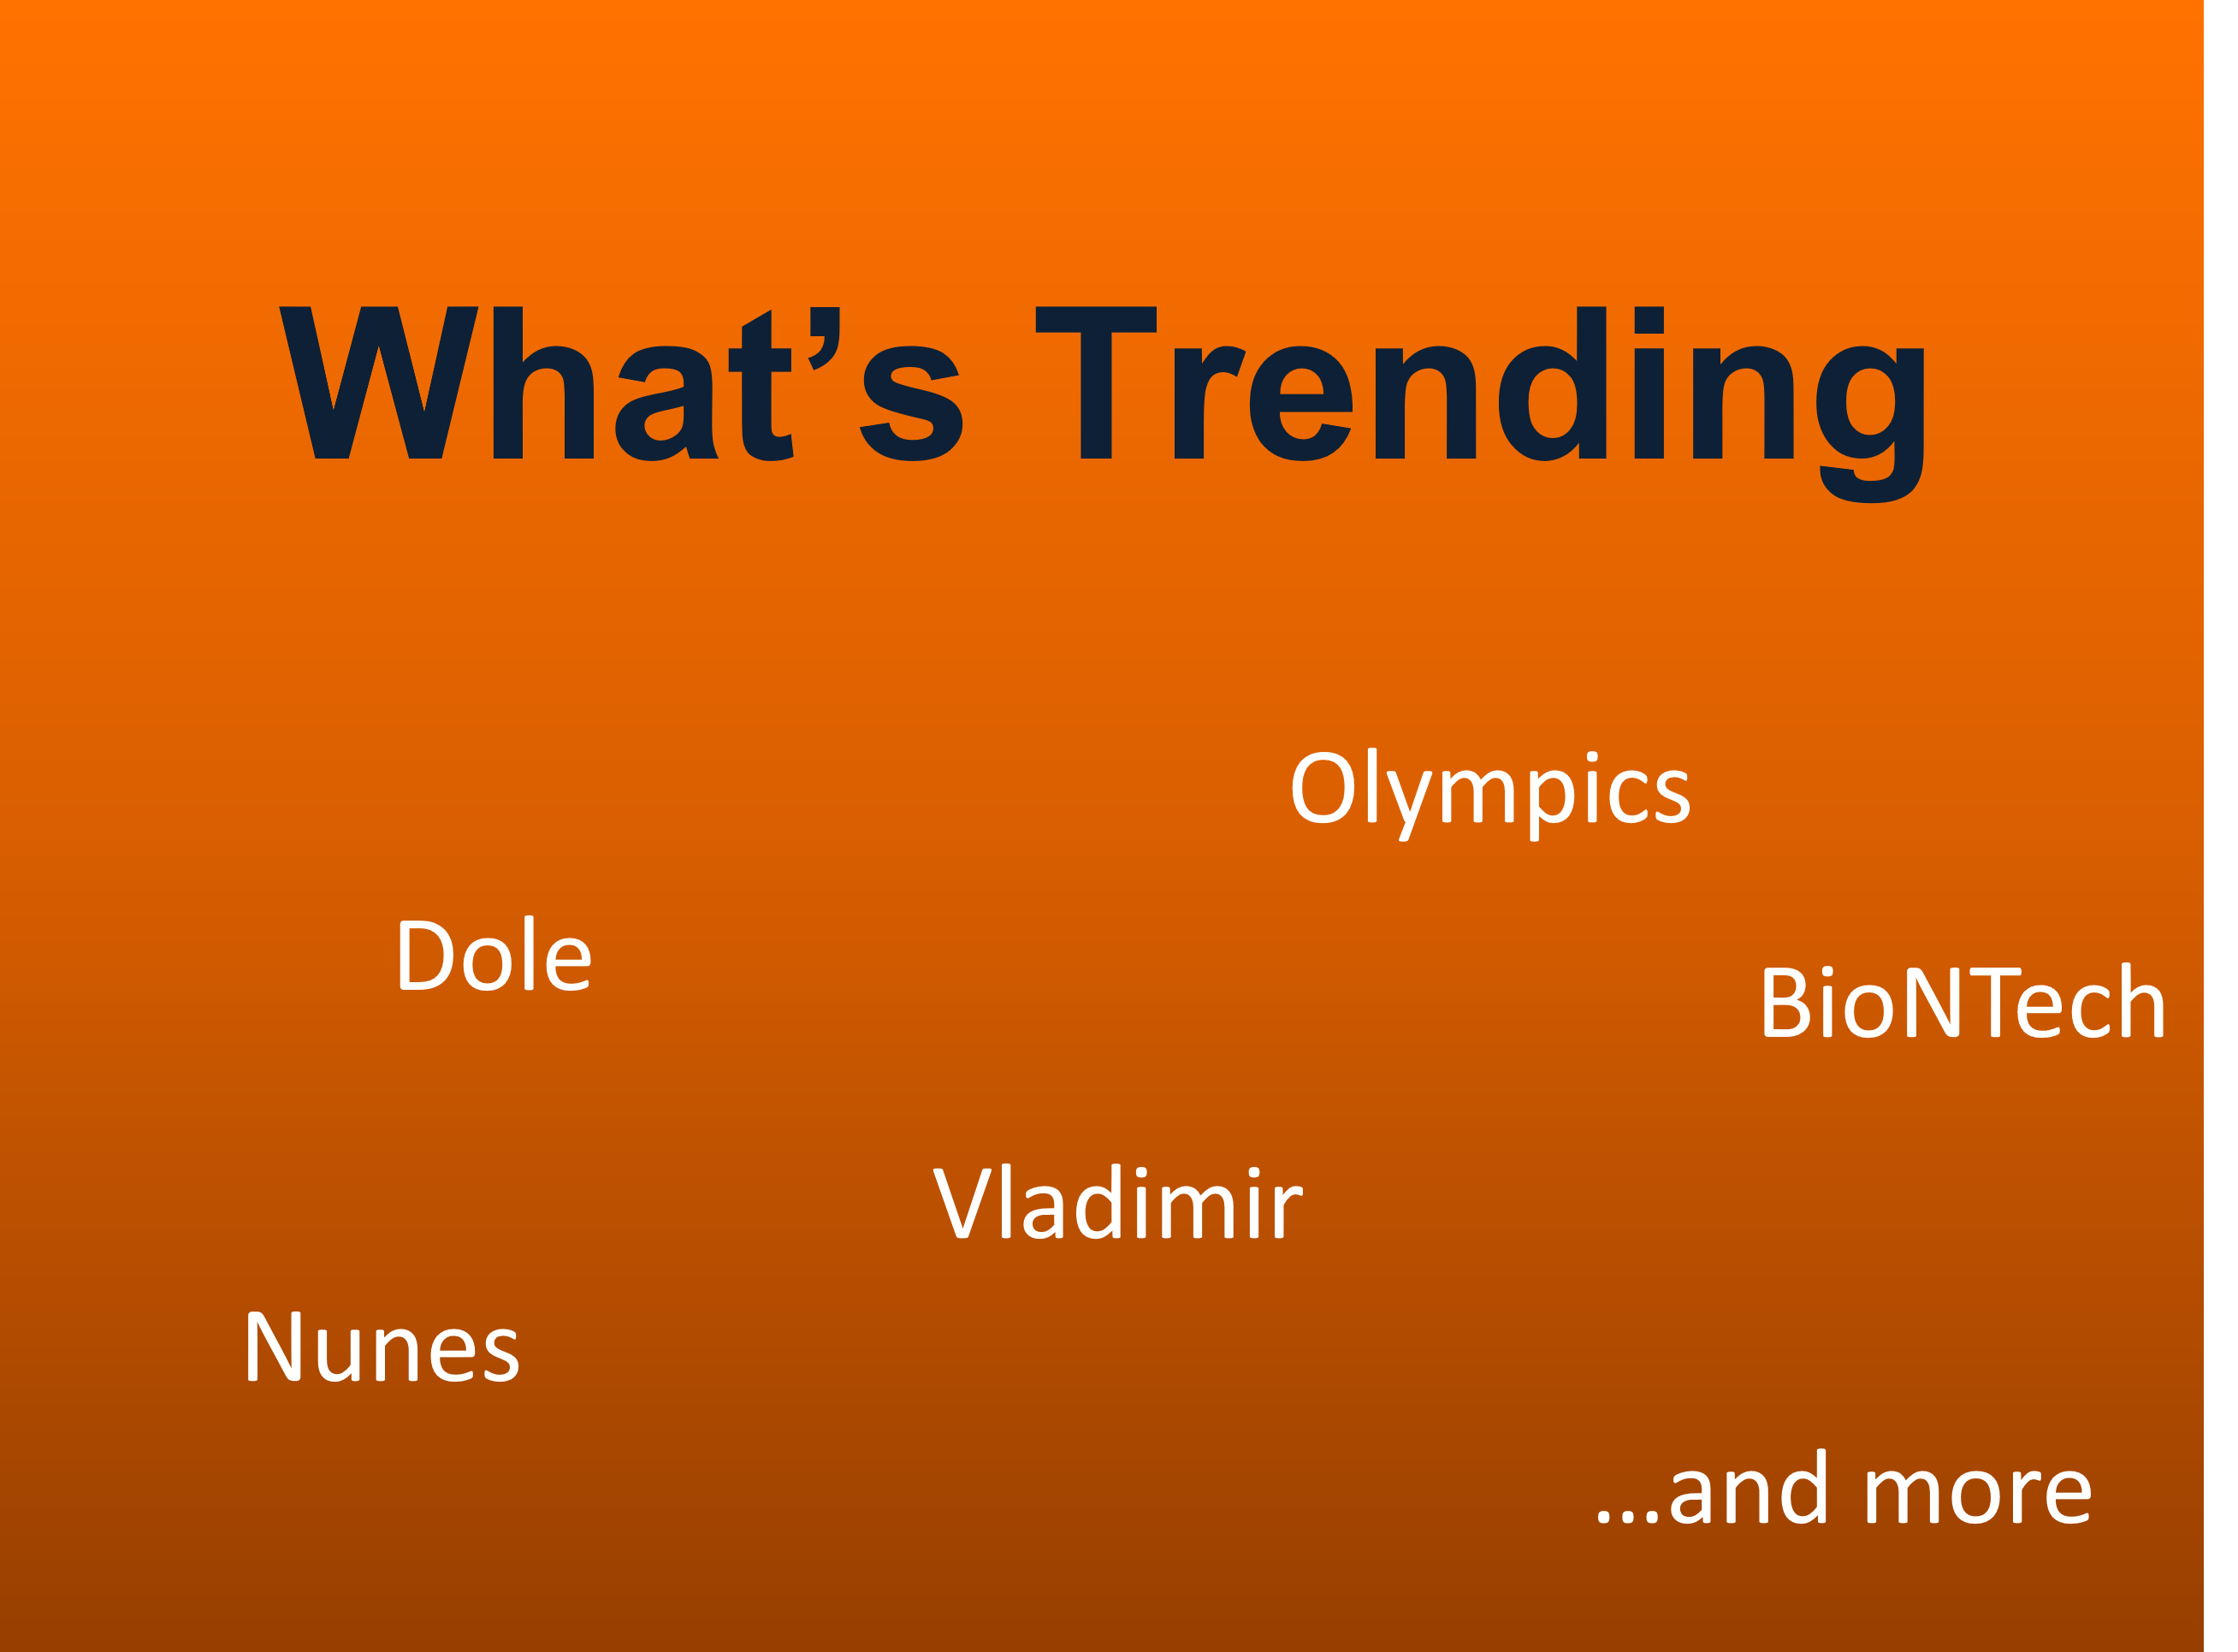 12/11/21 What's Trending This Week